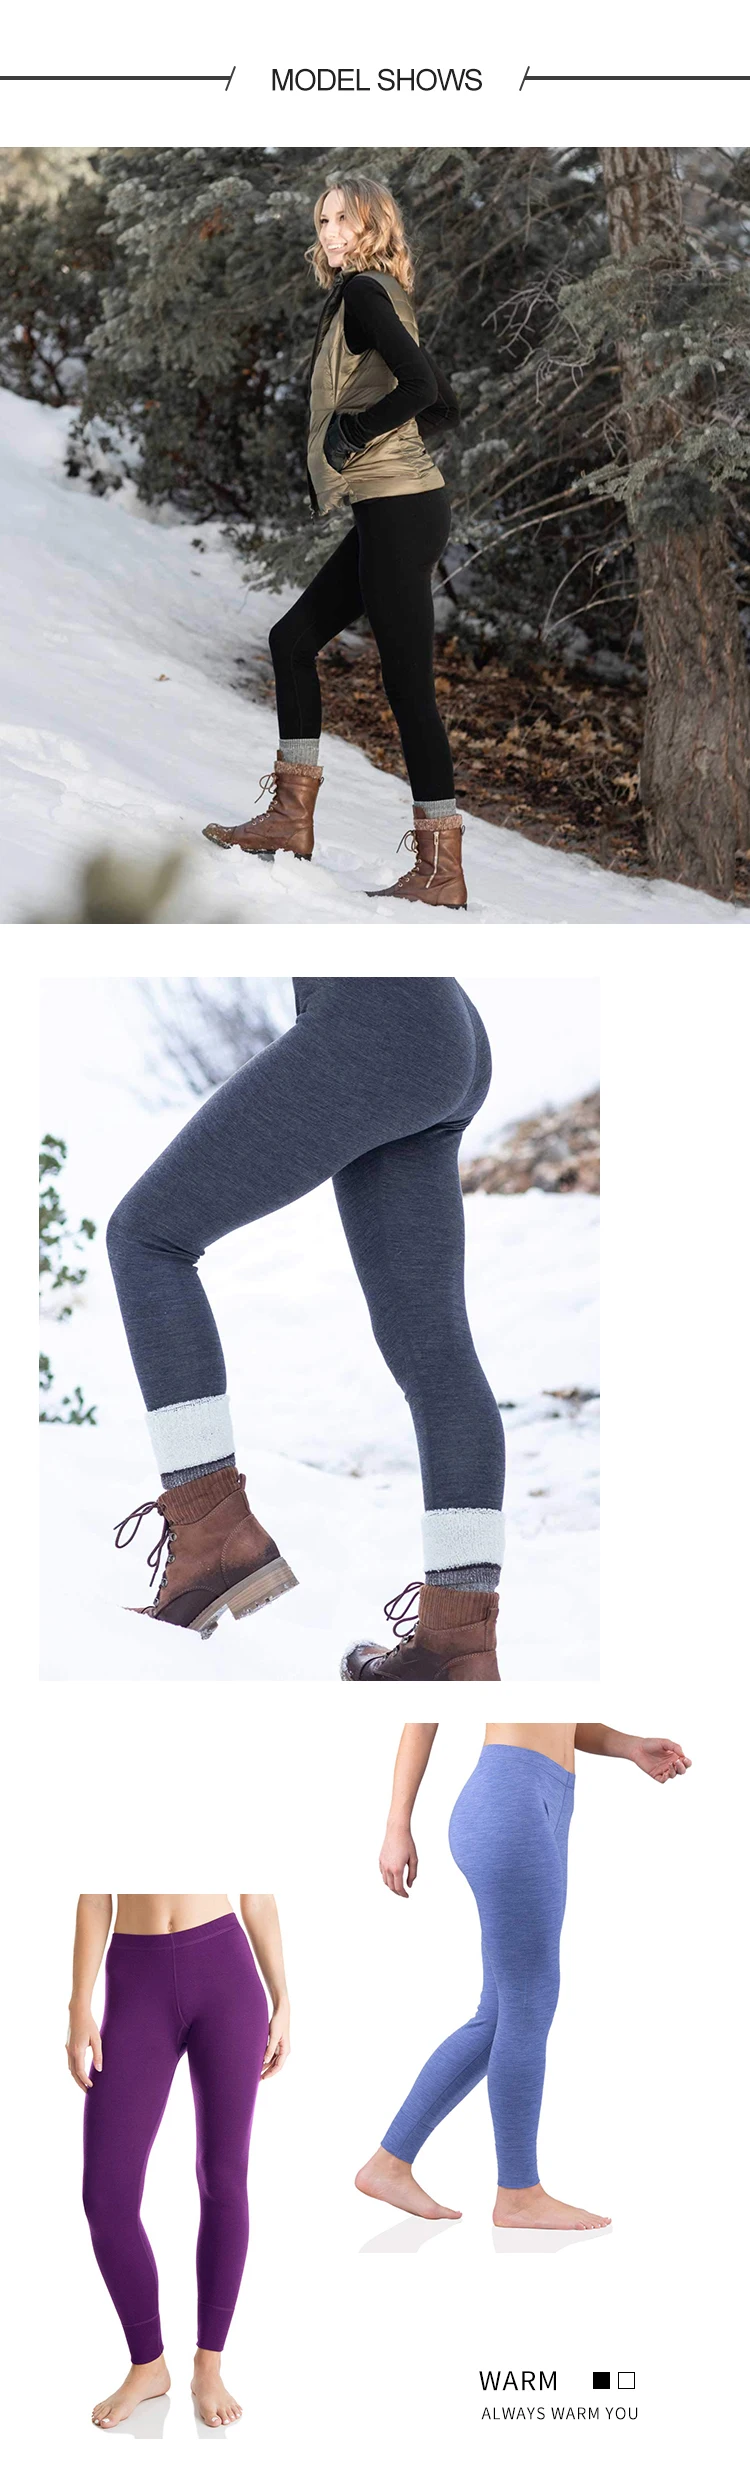 Enerup High Quality Sports Wear Compression Merino Wool Thermal Underwear Baselayer Leggings For Women